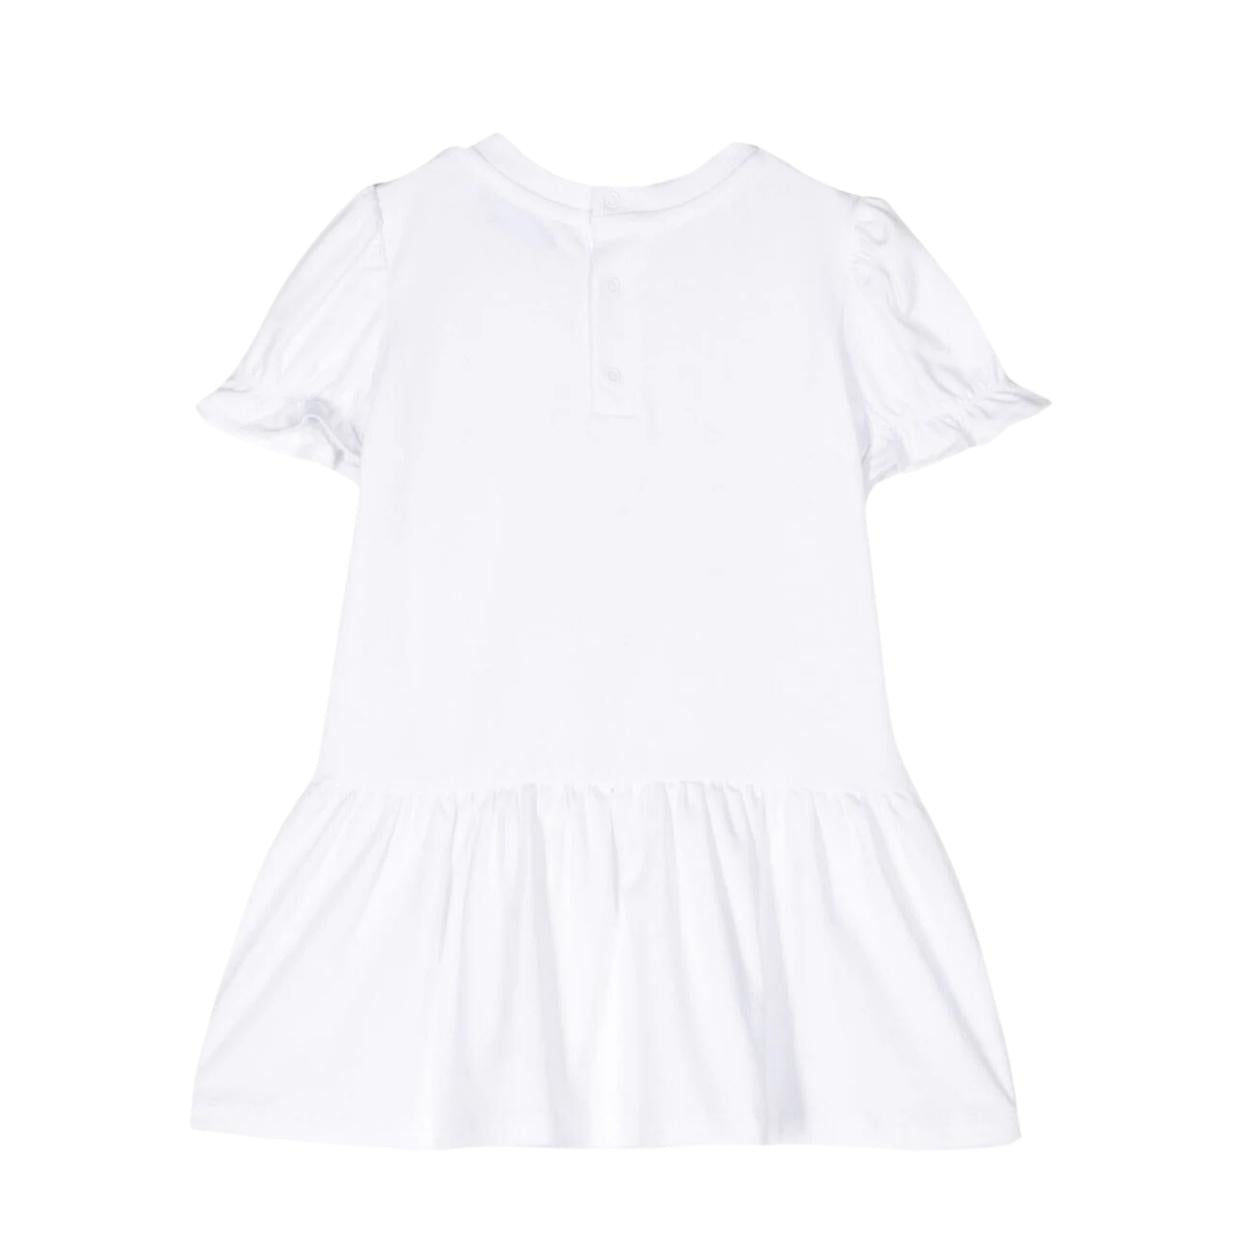 Moschino Baby Teddy Bear White Dress